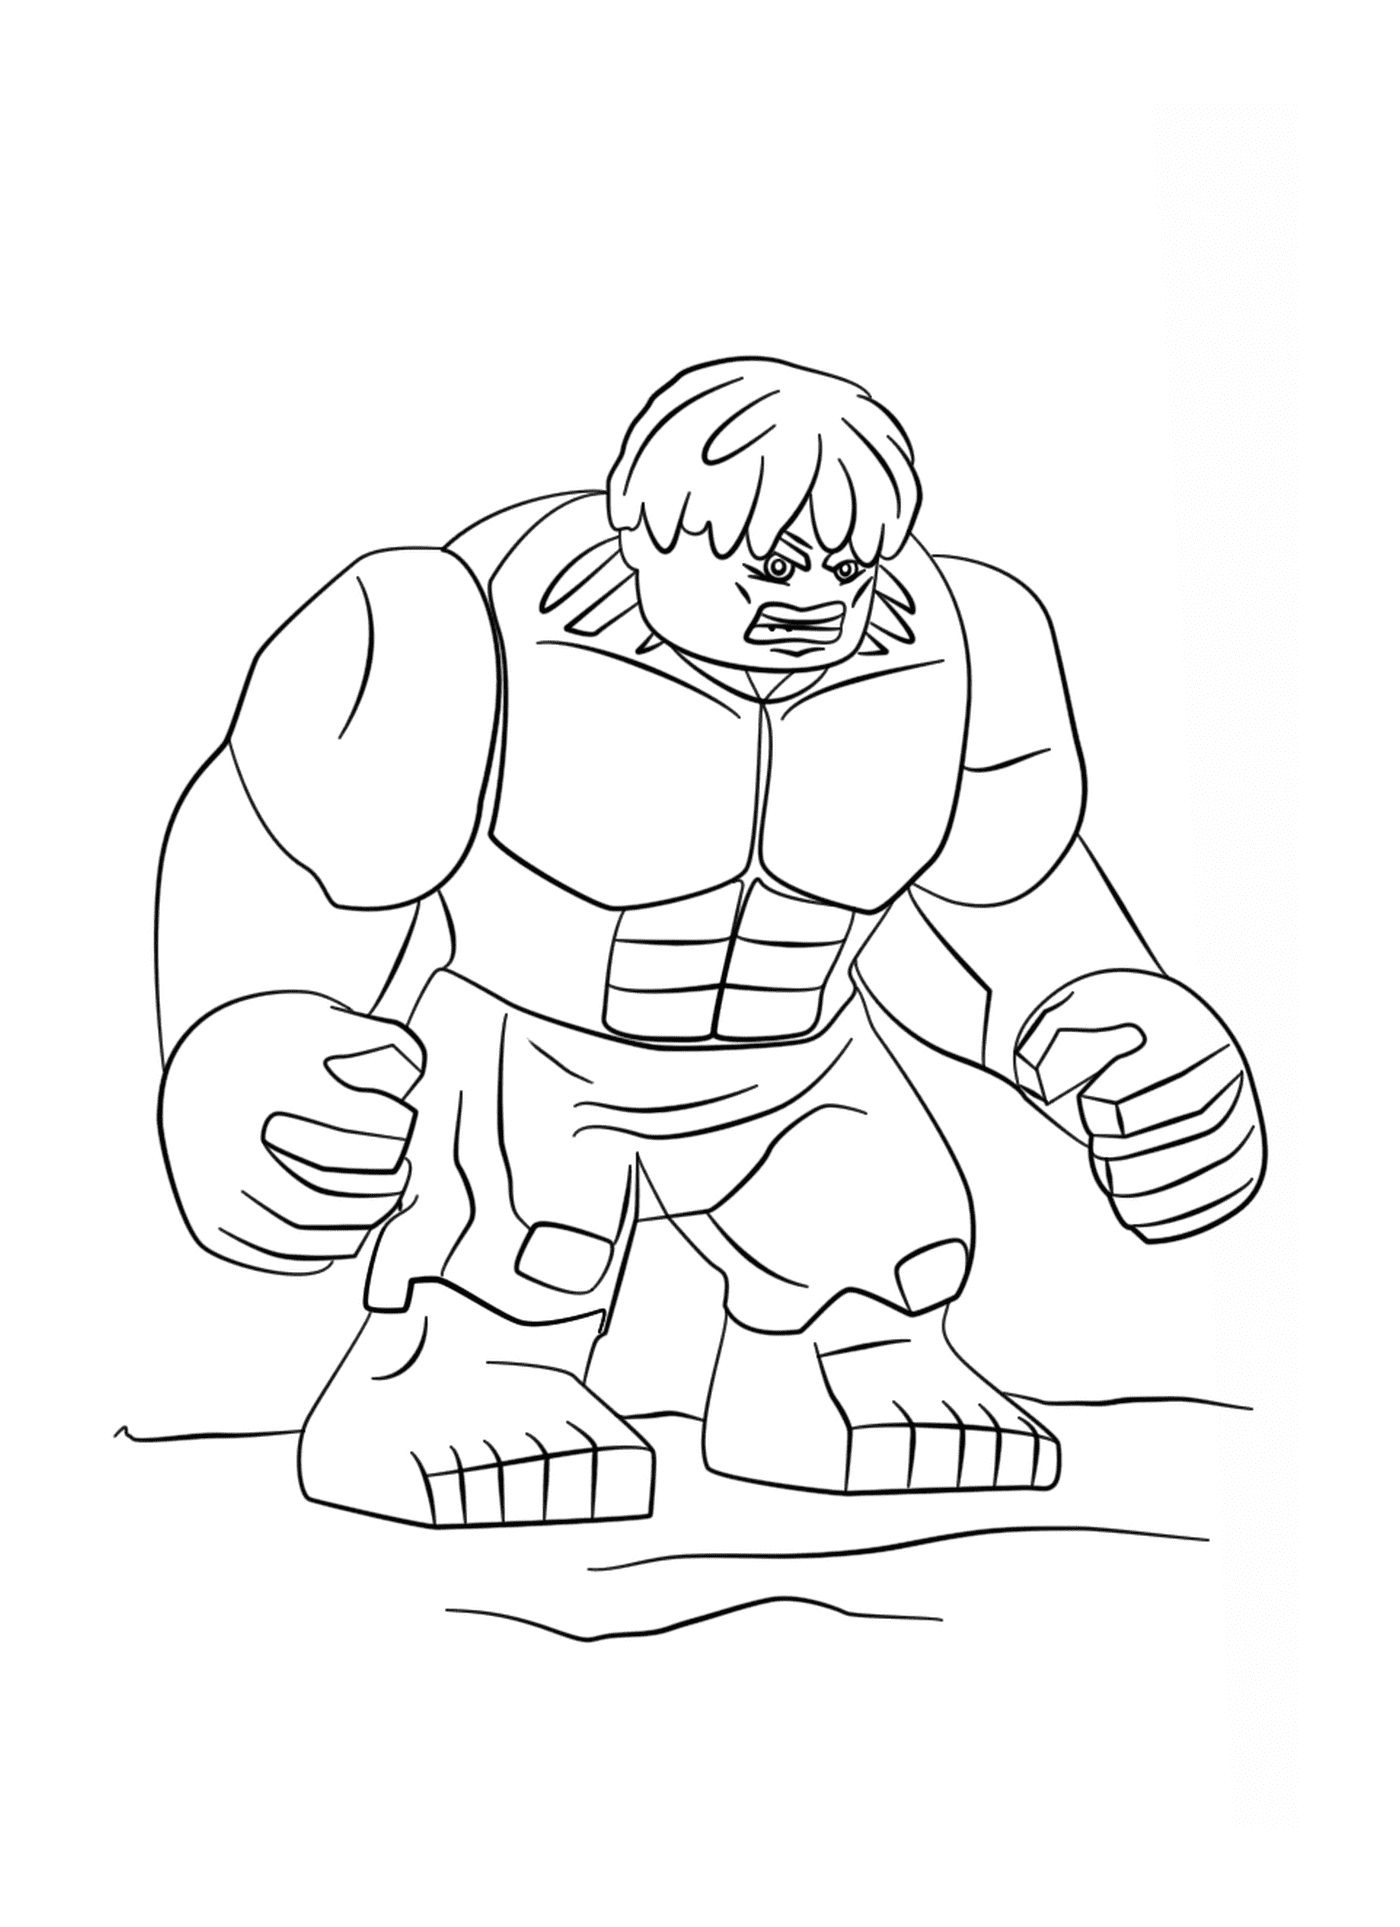  Hulk, um corpo enorme 